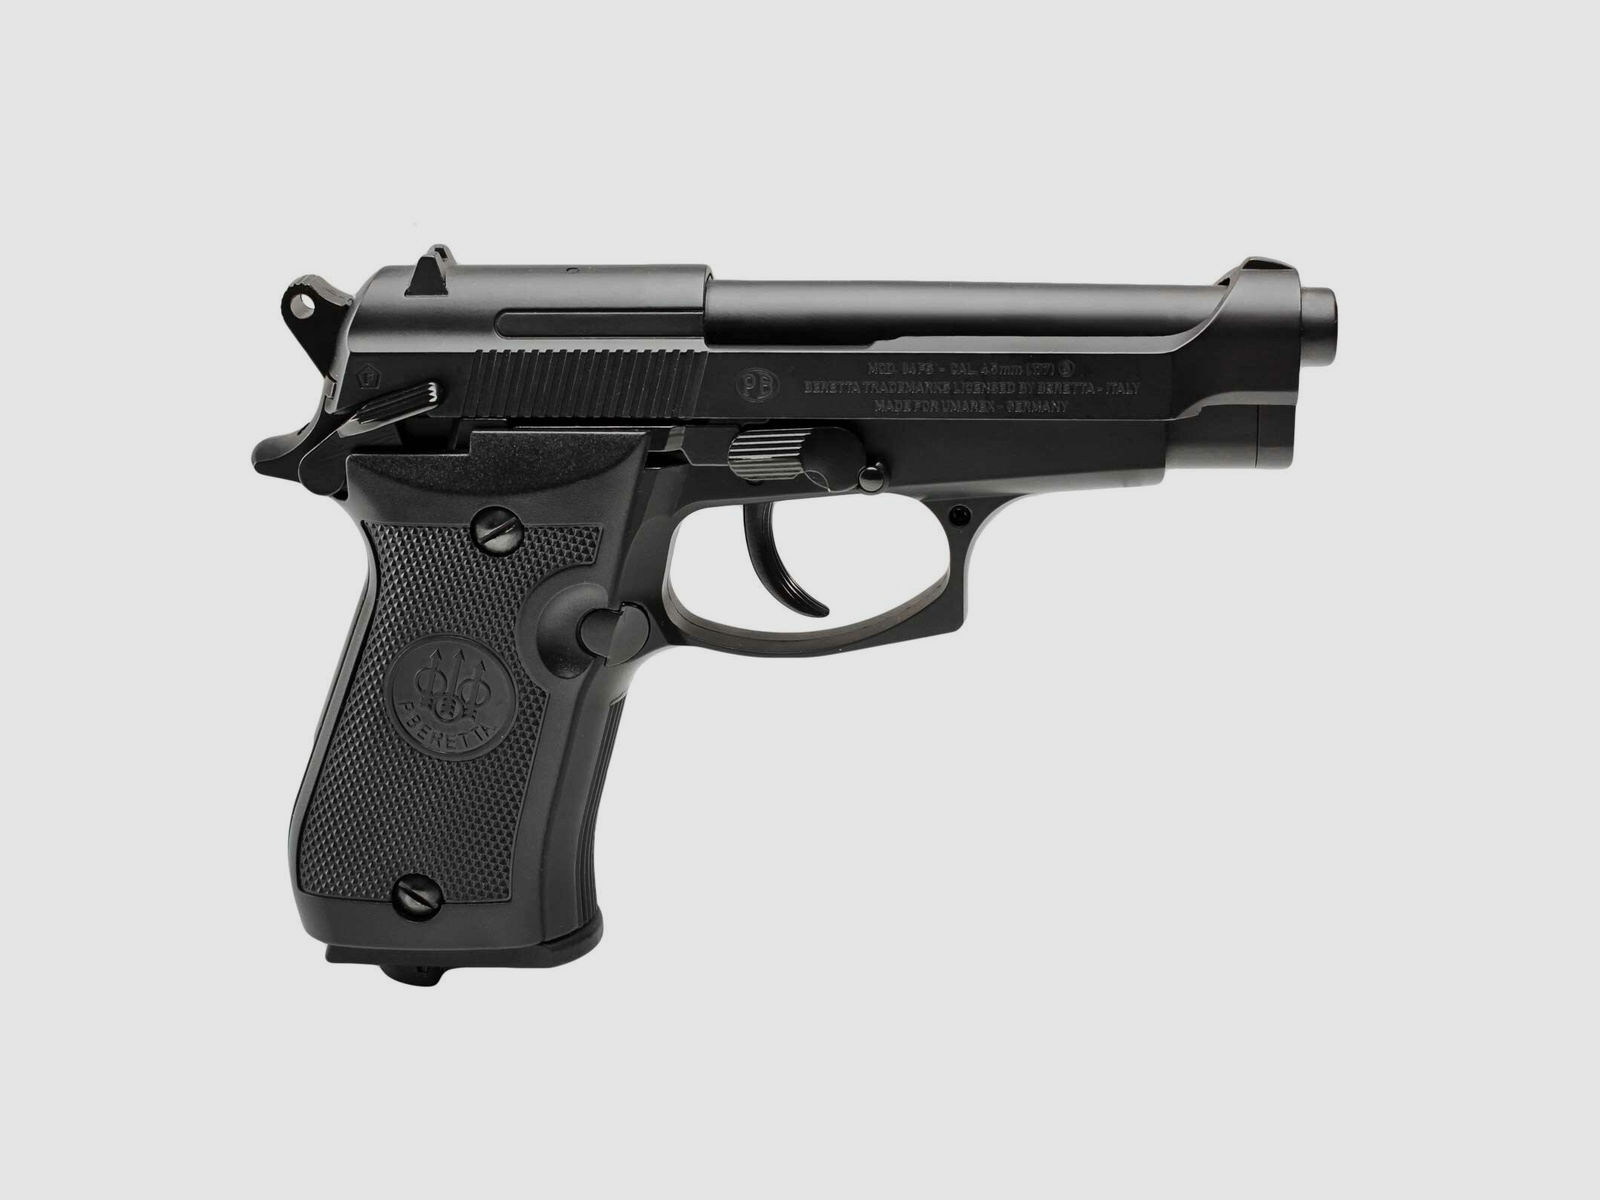 Luftpistolenset Beretta M84 FS 4,5 mm BB Co2-Pistole Blowback Vollmetall (P18)